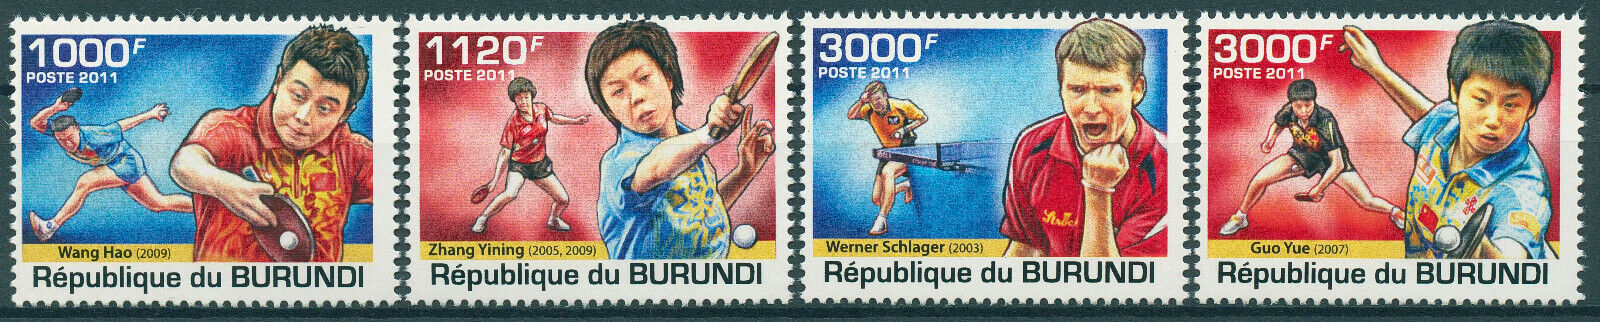 Burundi 2011 MNH Sports Stamps Table Tennis Champions Wang Hao Guo Yue 4v Set